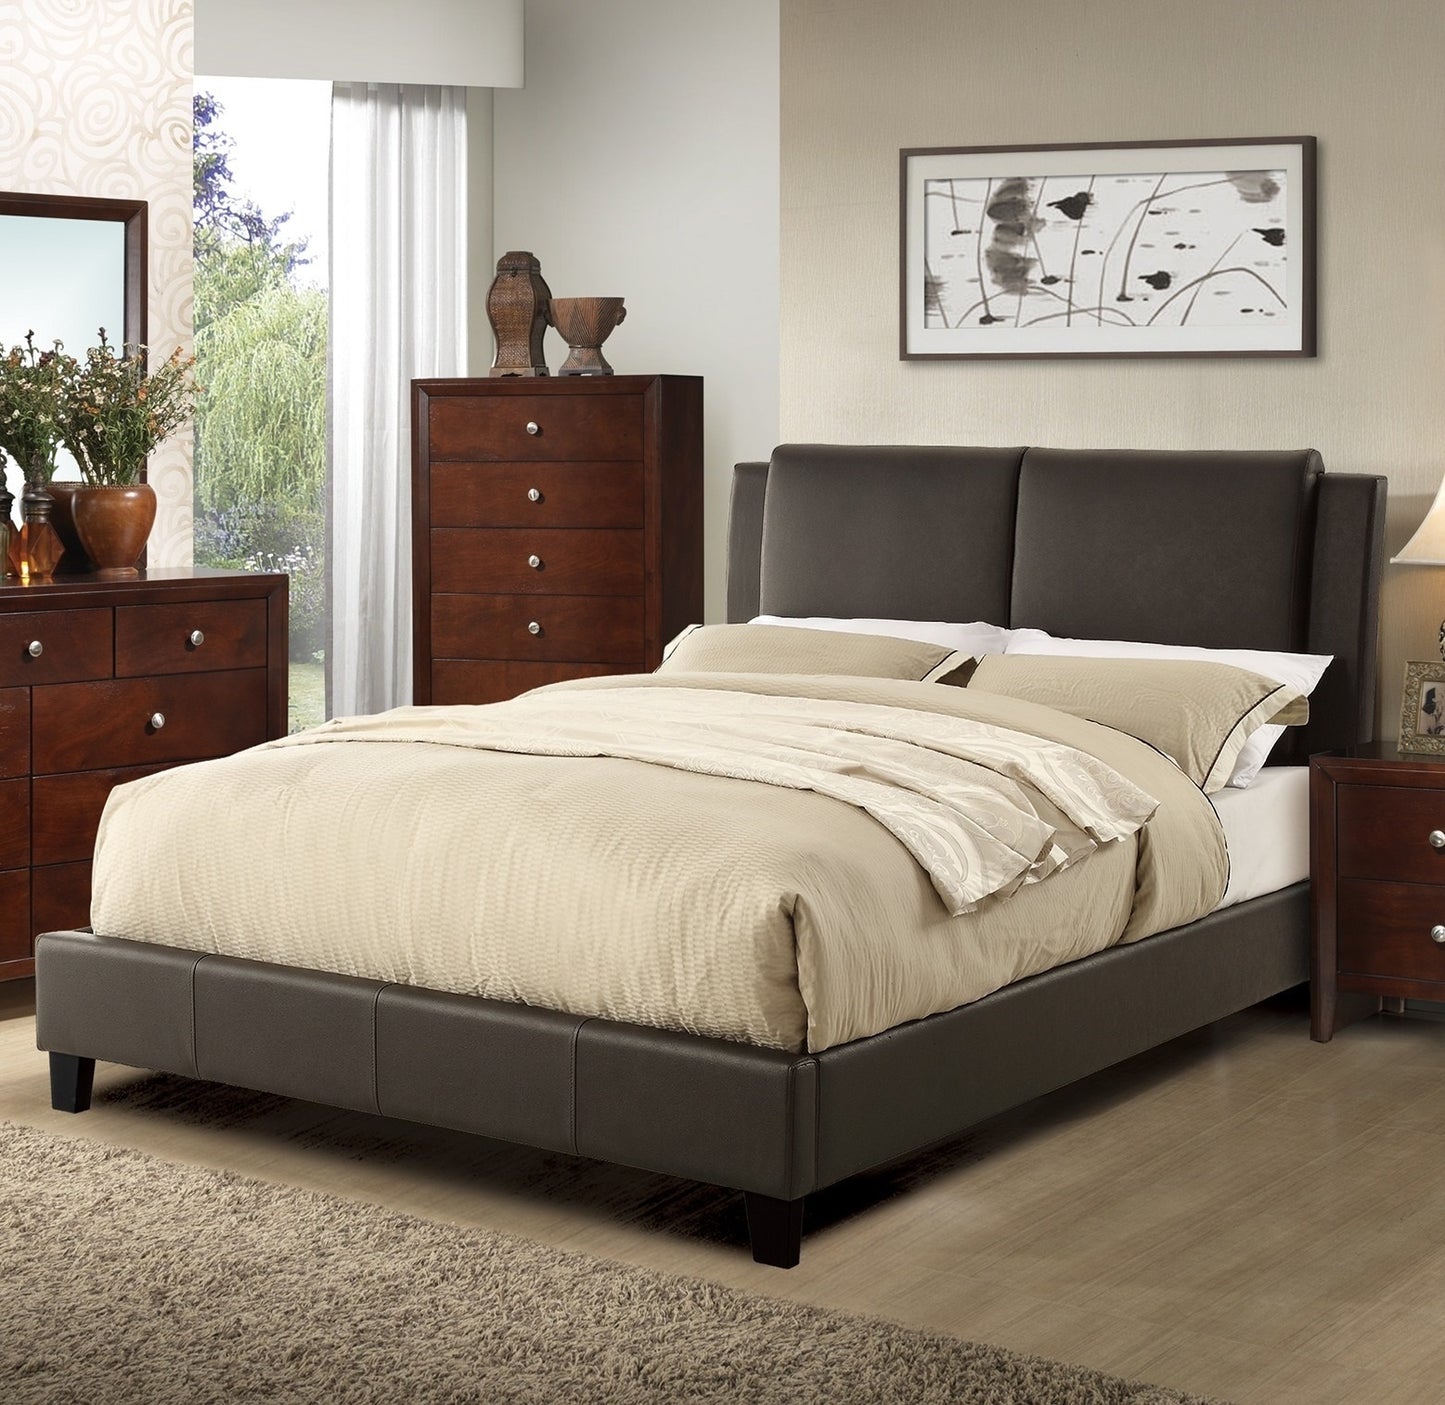 Luxury Dream Bed - Full Size